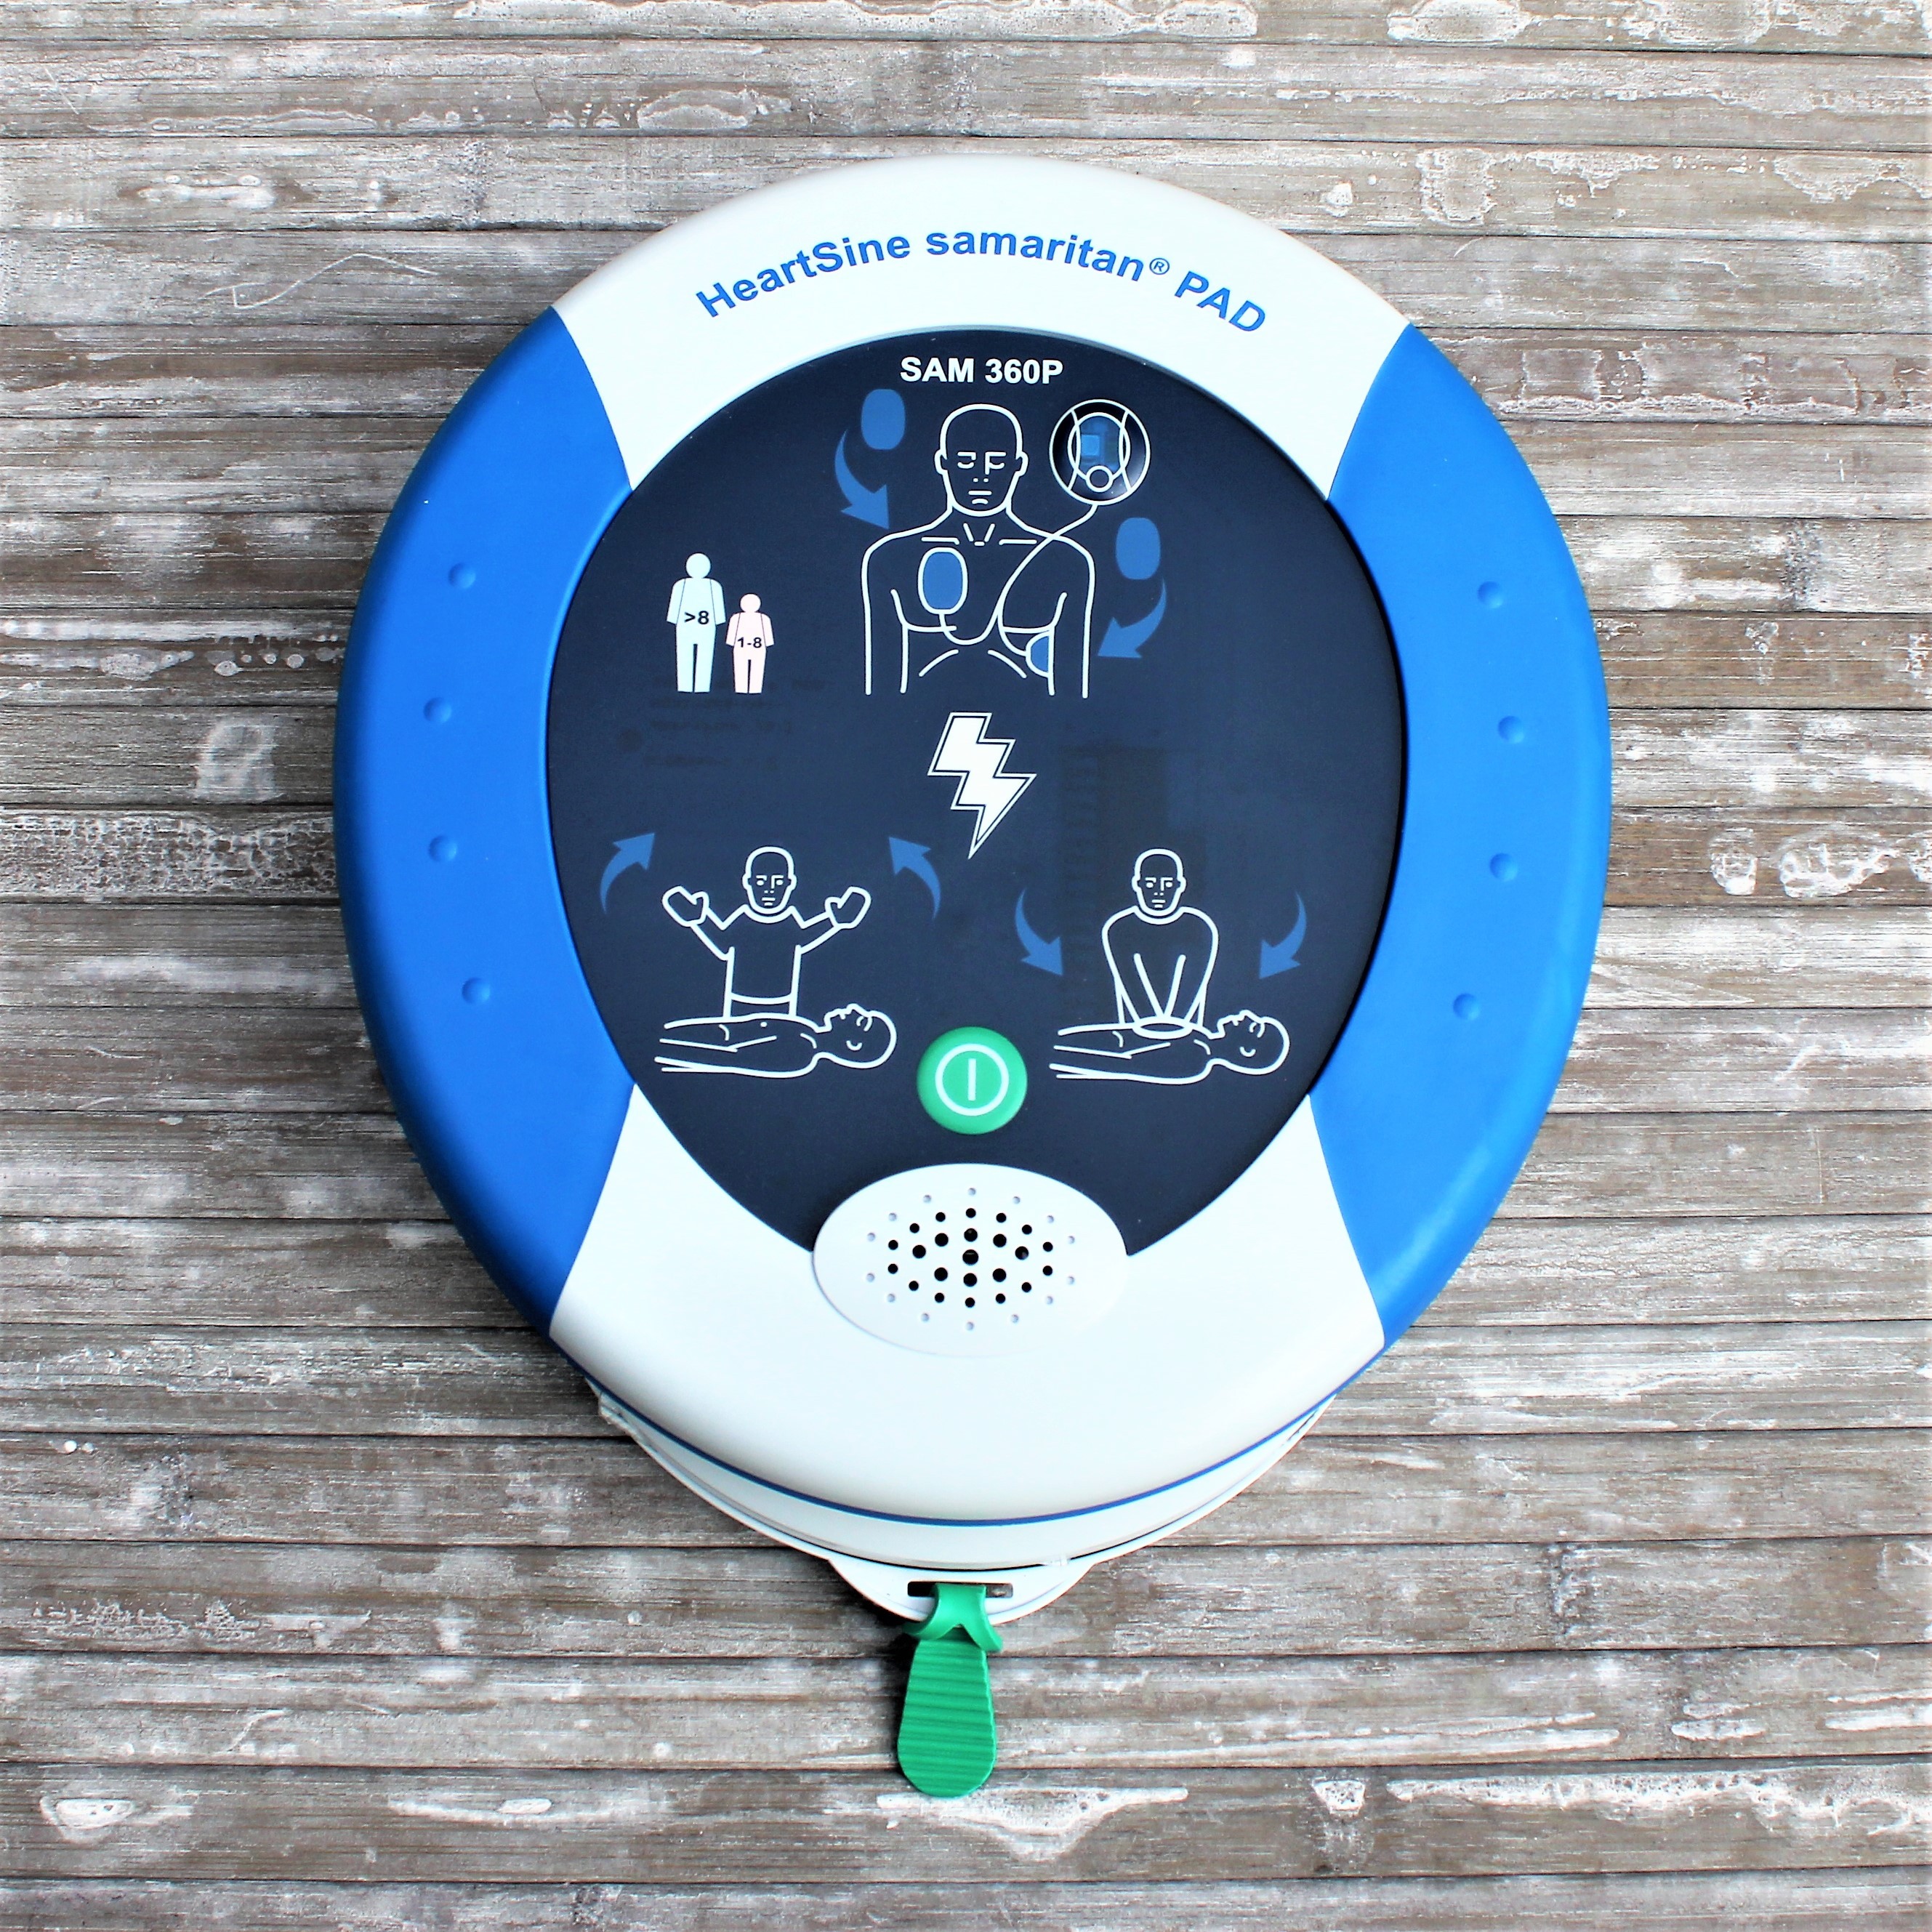 Defibrillator HeartSine SAM 360P